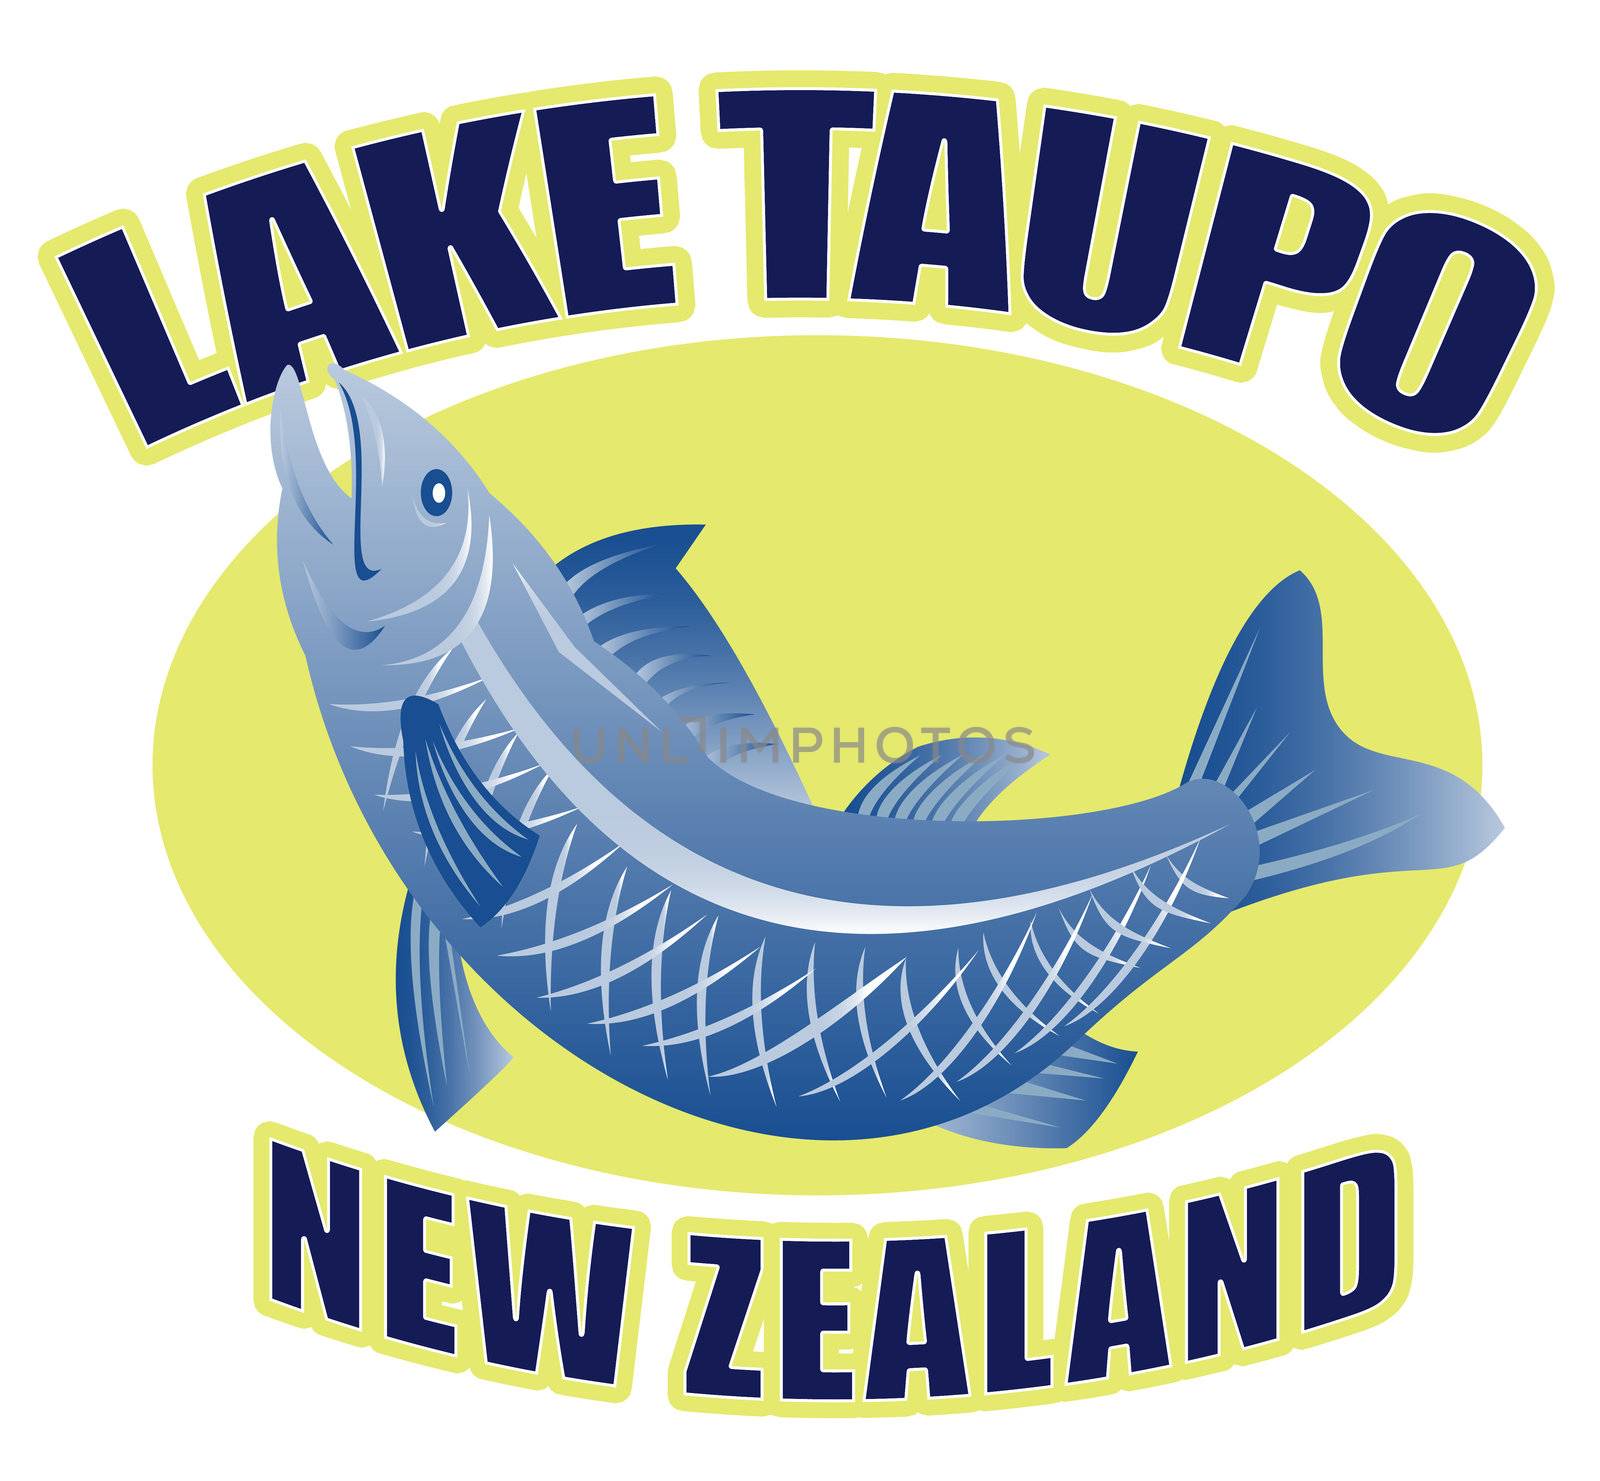 Trout fish lake taupo new zealand by patrimonio